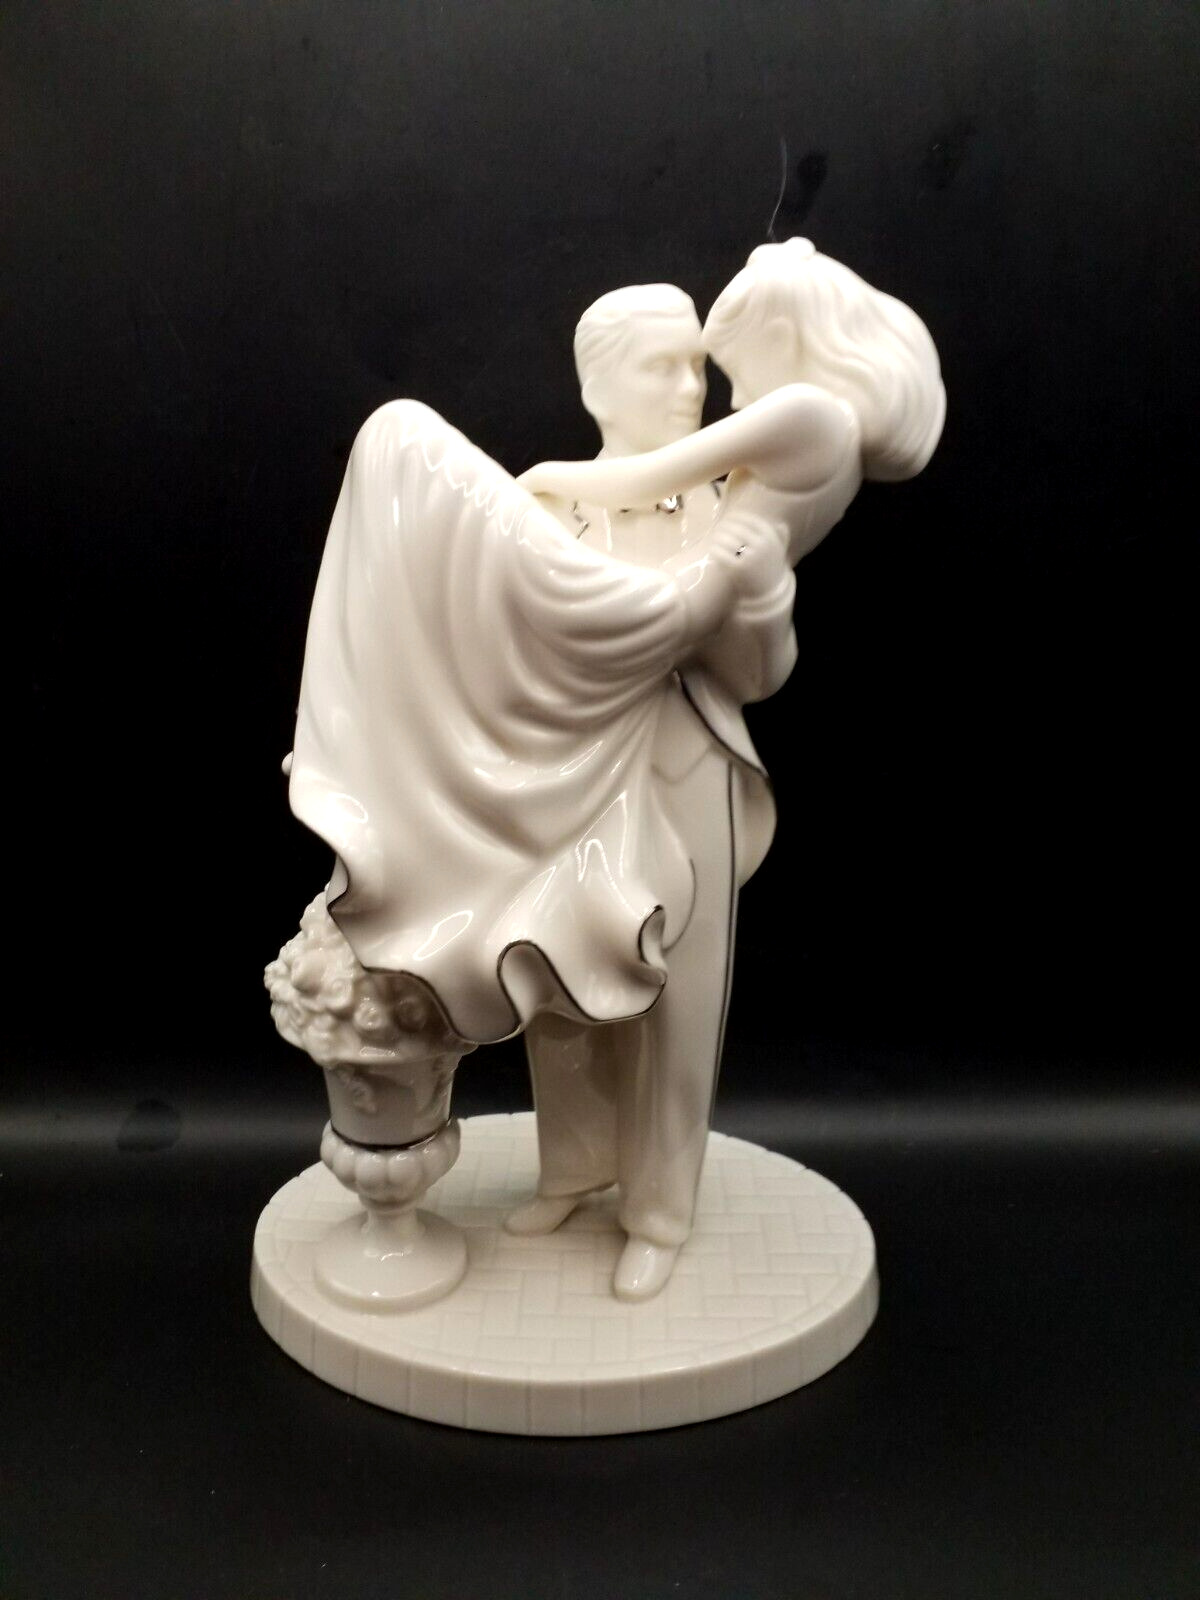 New Lenox Cake Topper Wedding Promise Figurine Swept Away Bride Groom $100 orig